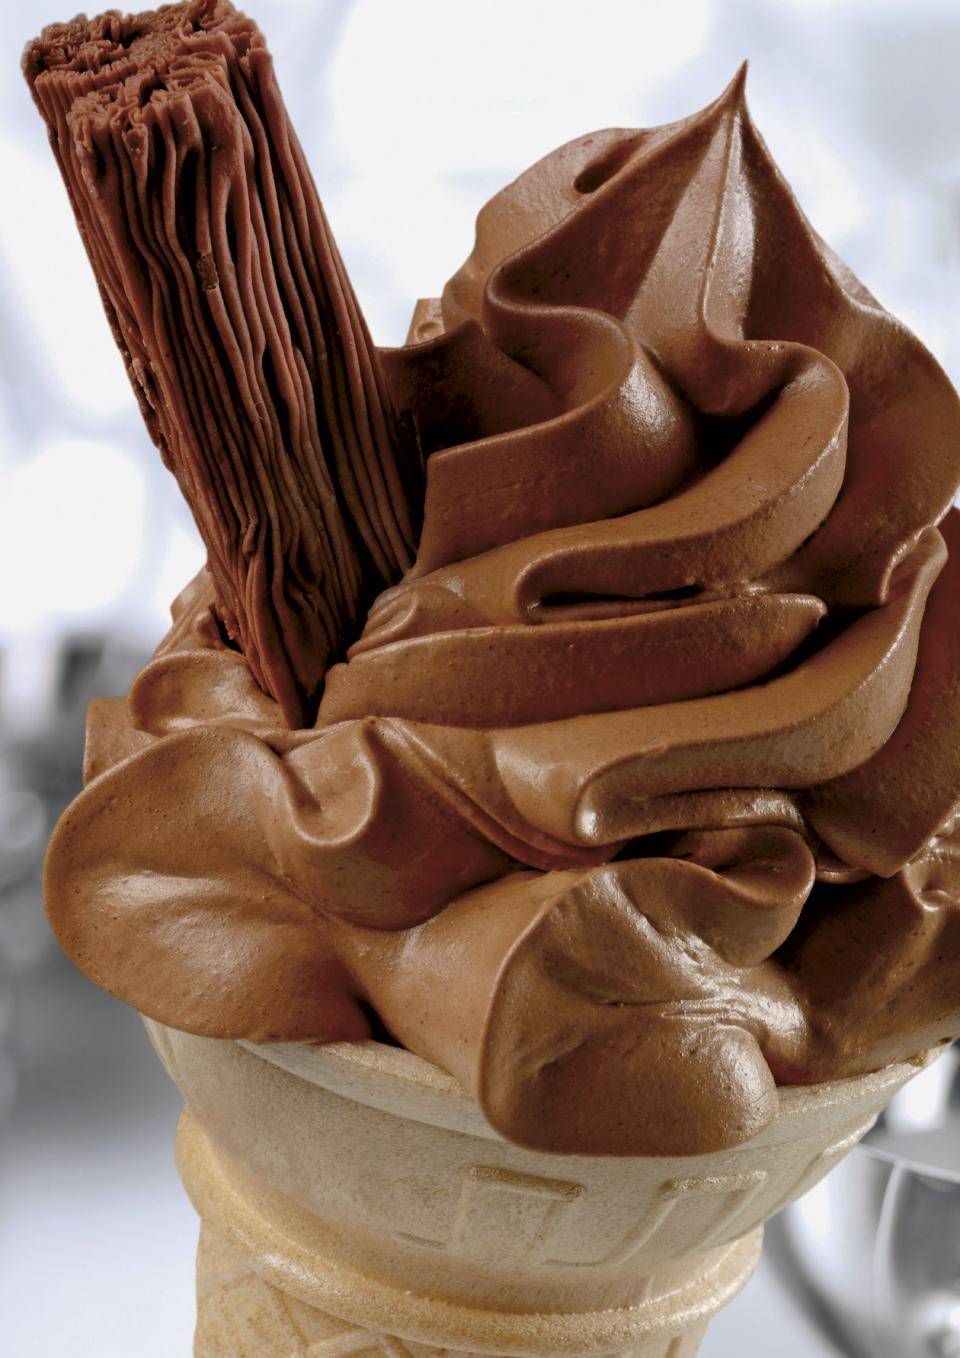 A swirl of soft-serve chocoalte ice cream in a cone